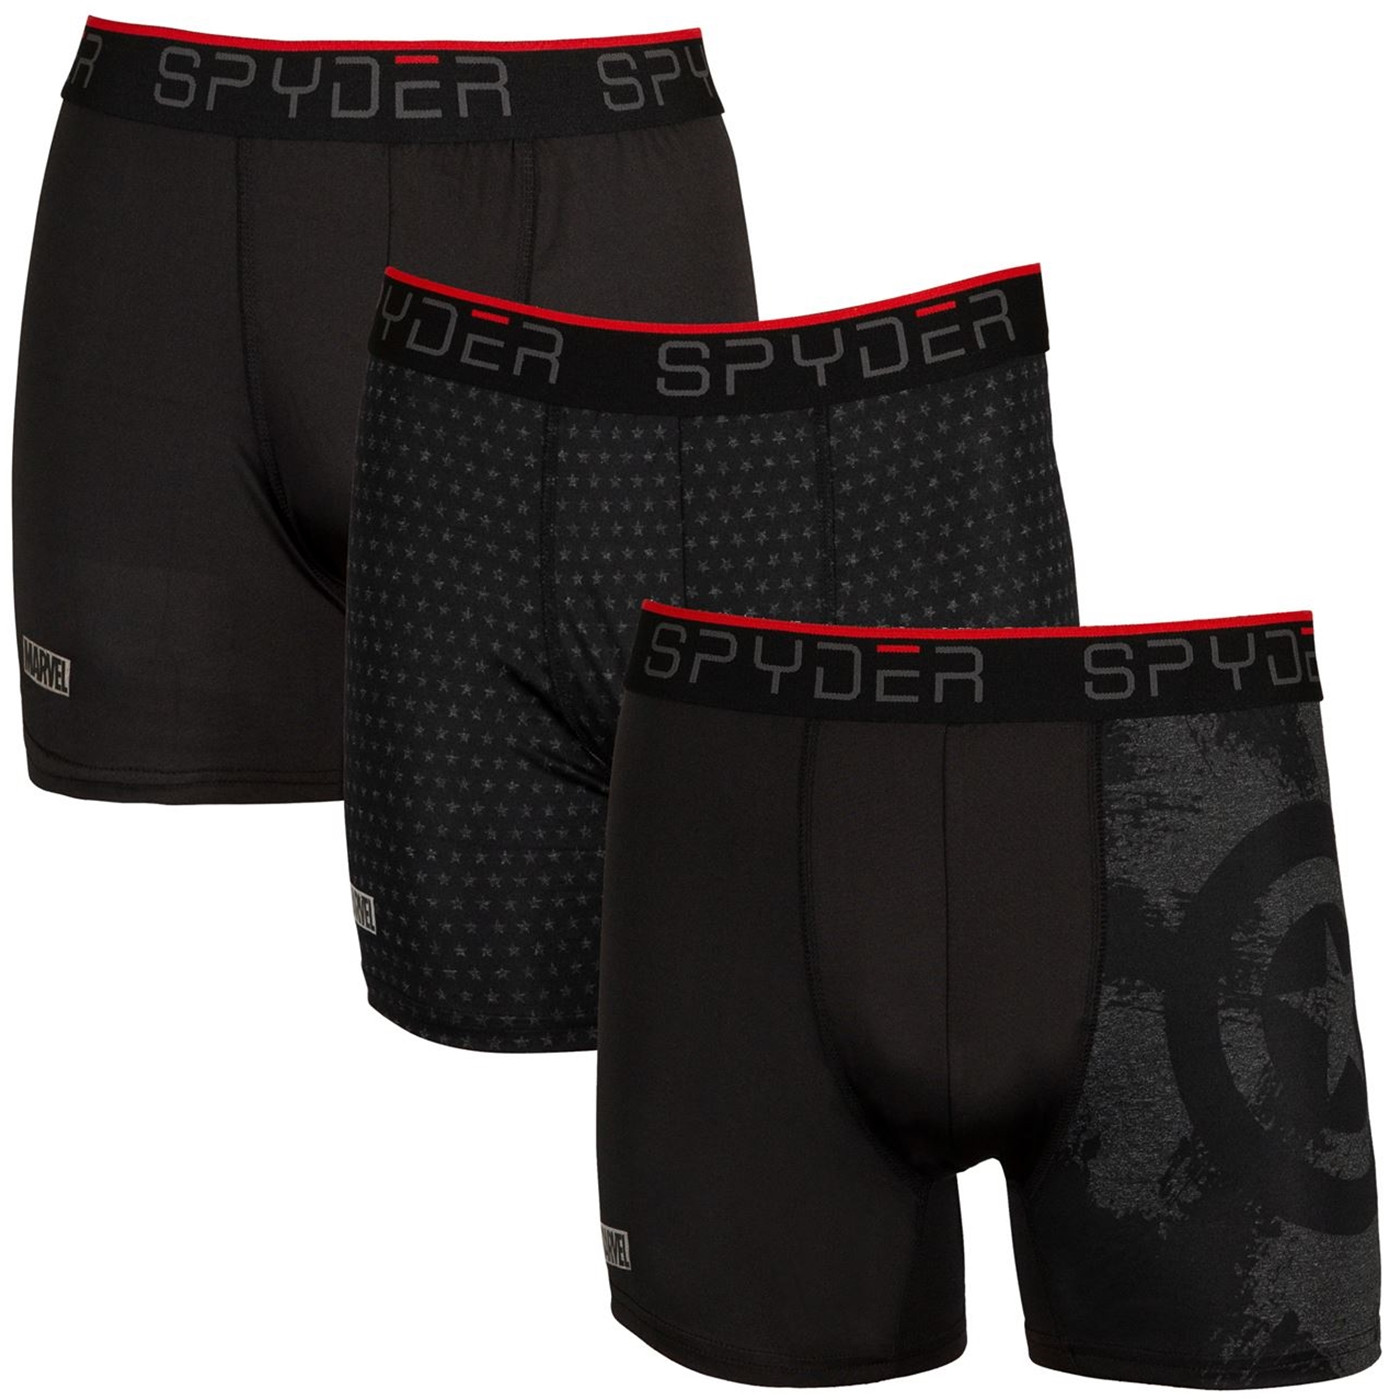 Captain America Spyder Performance Sports Boxer Briefs 3-Pair Pack